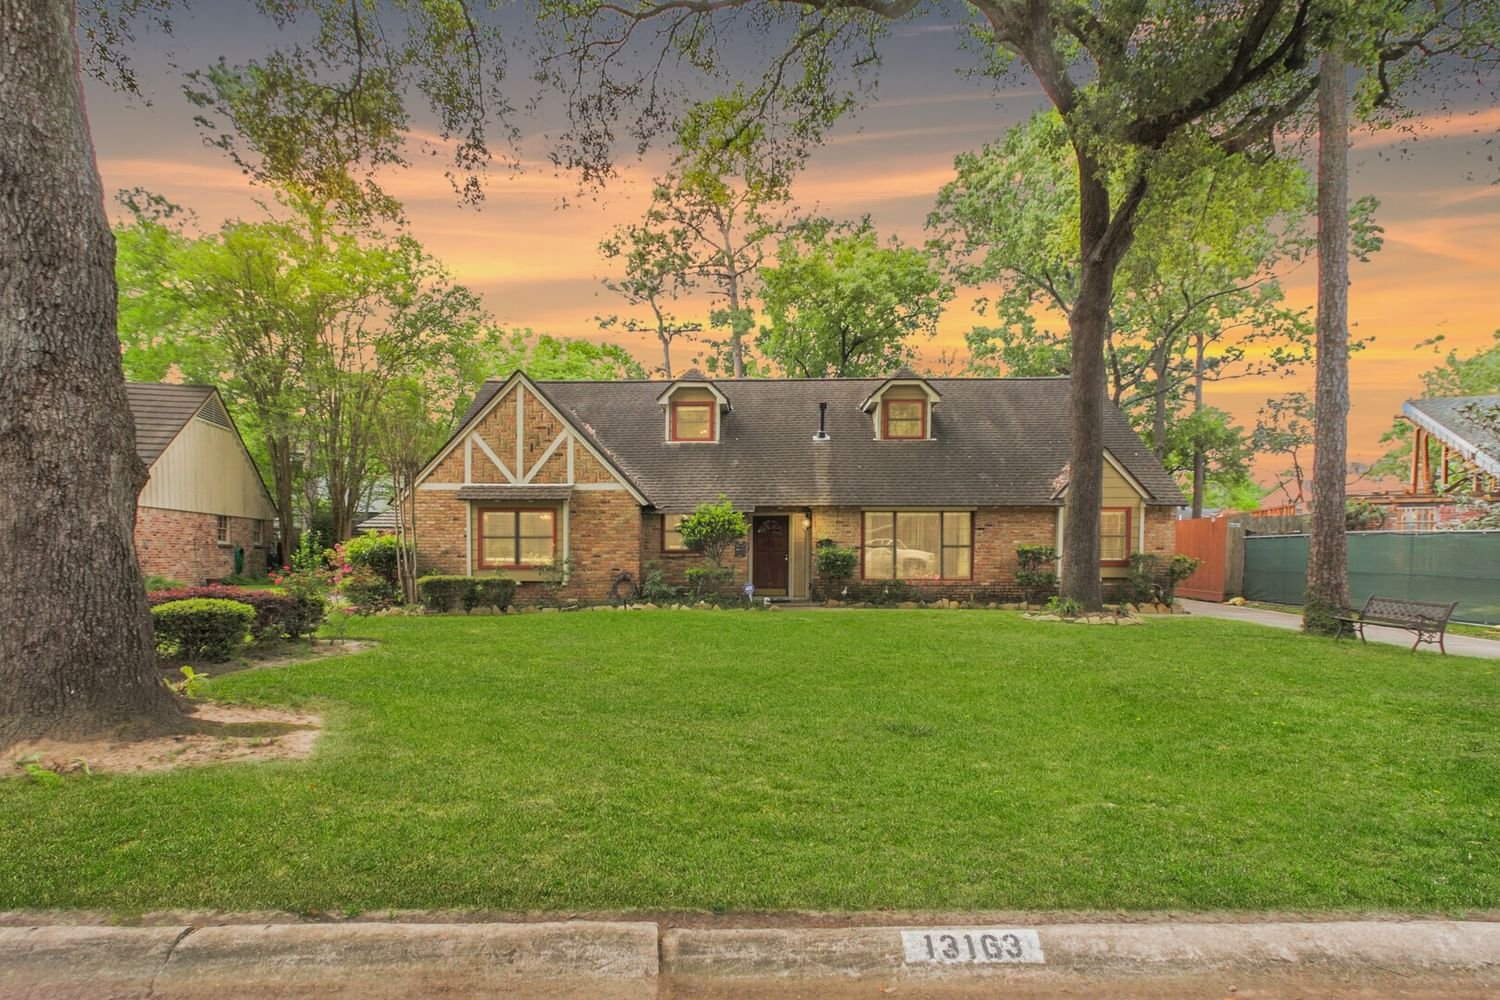 Real estate property located at 13163 Rummel Creek, Harris, Rustling Oaks, Houston, TX, US